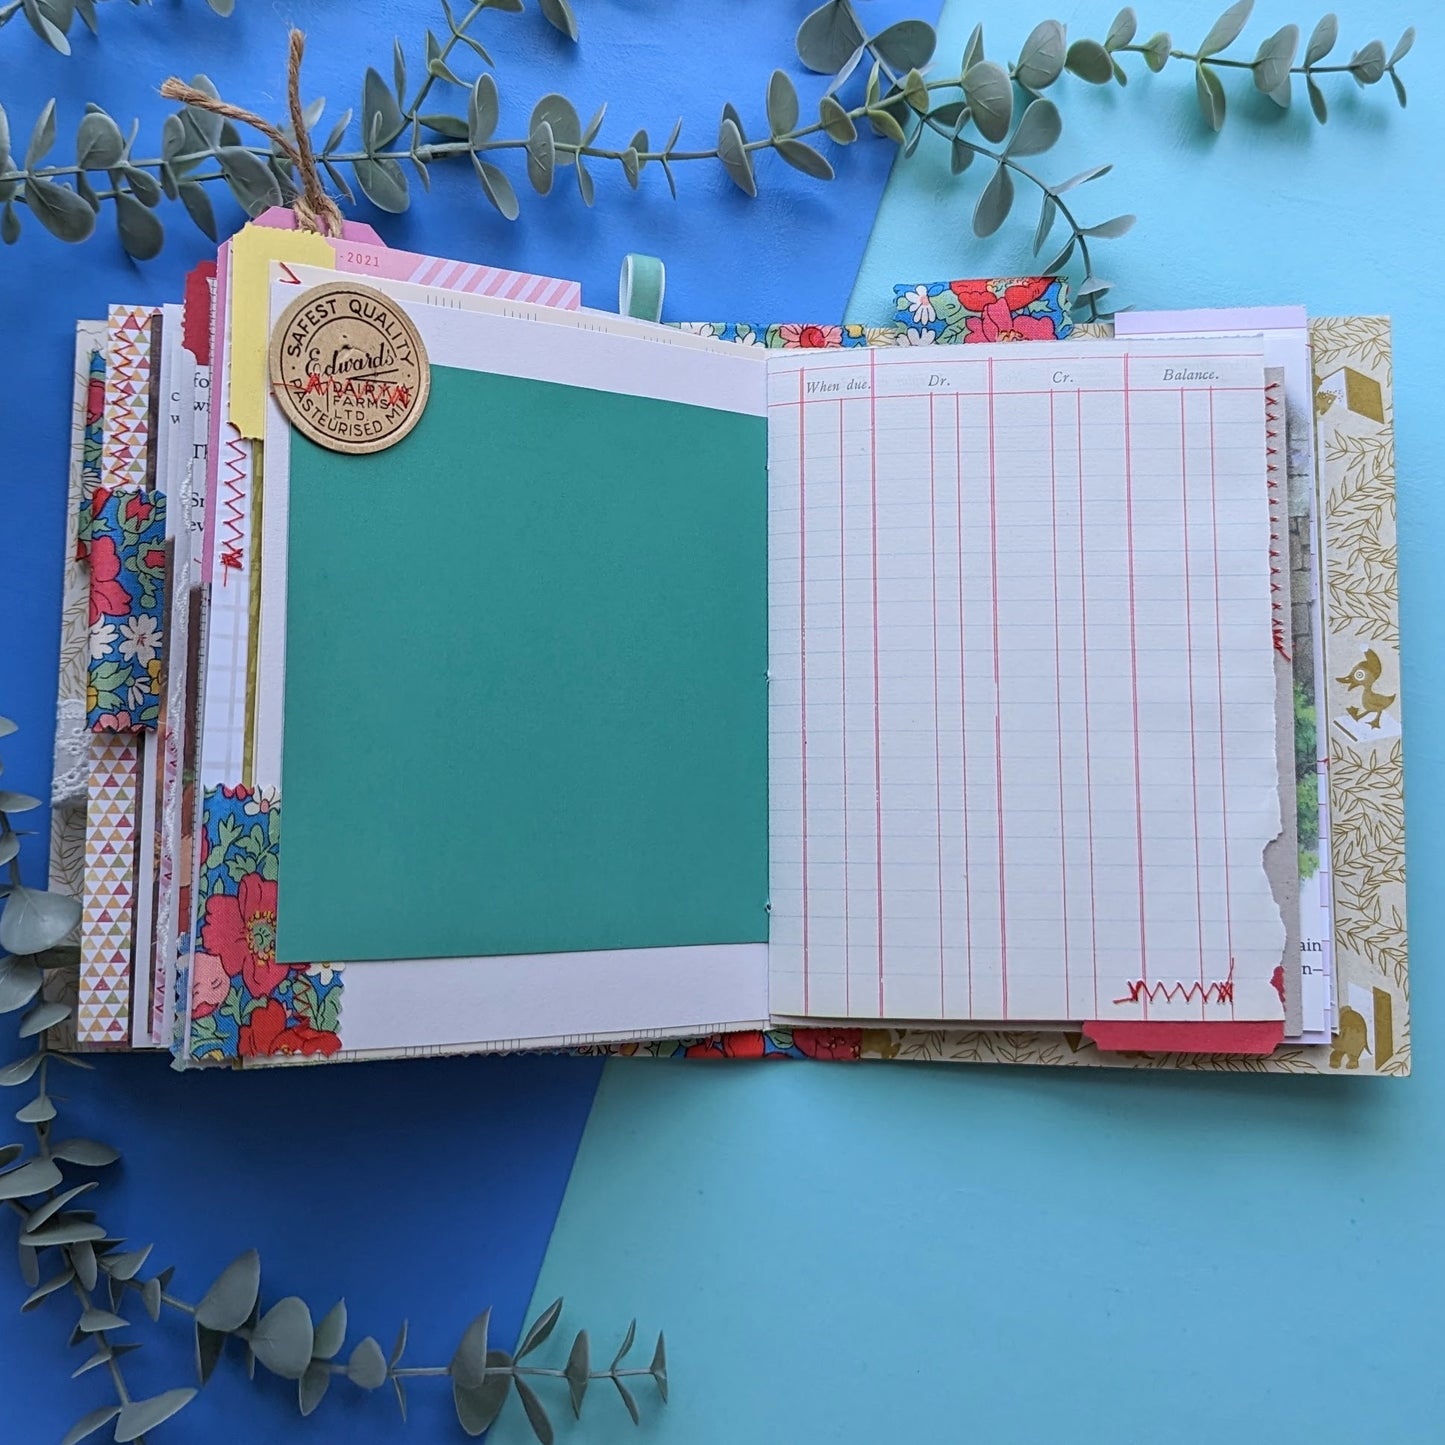 Handmade Upcycled Journal - Snow White